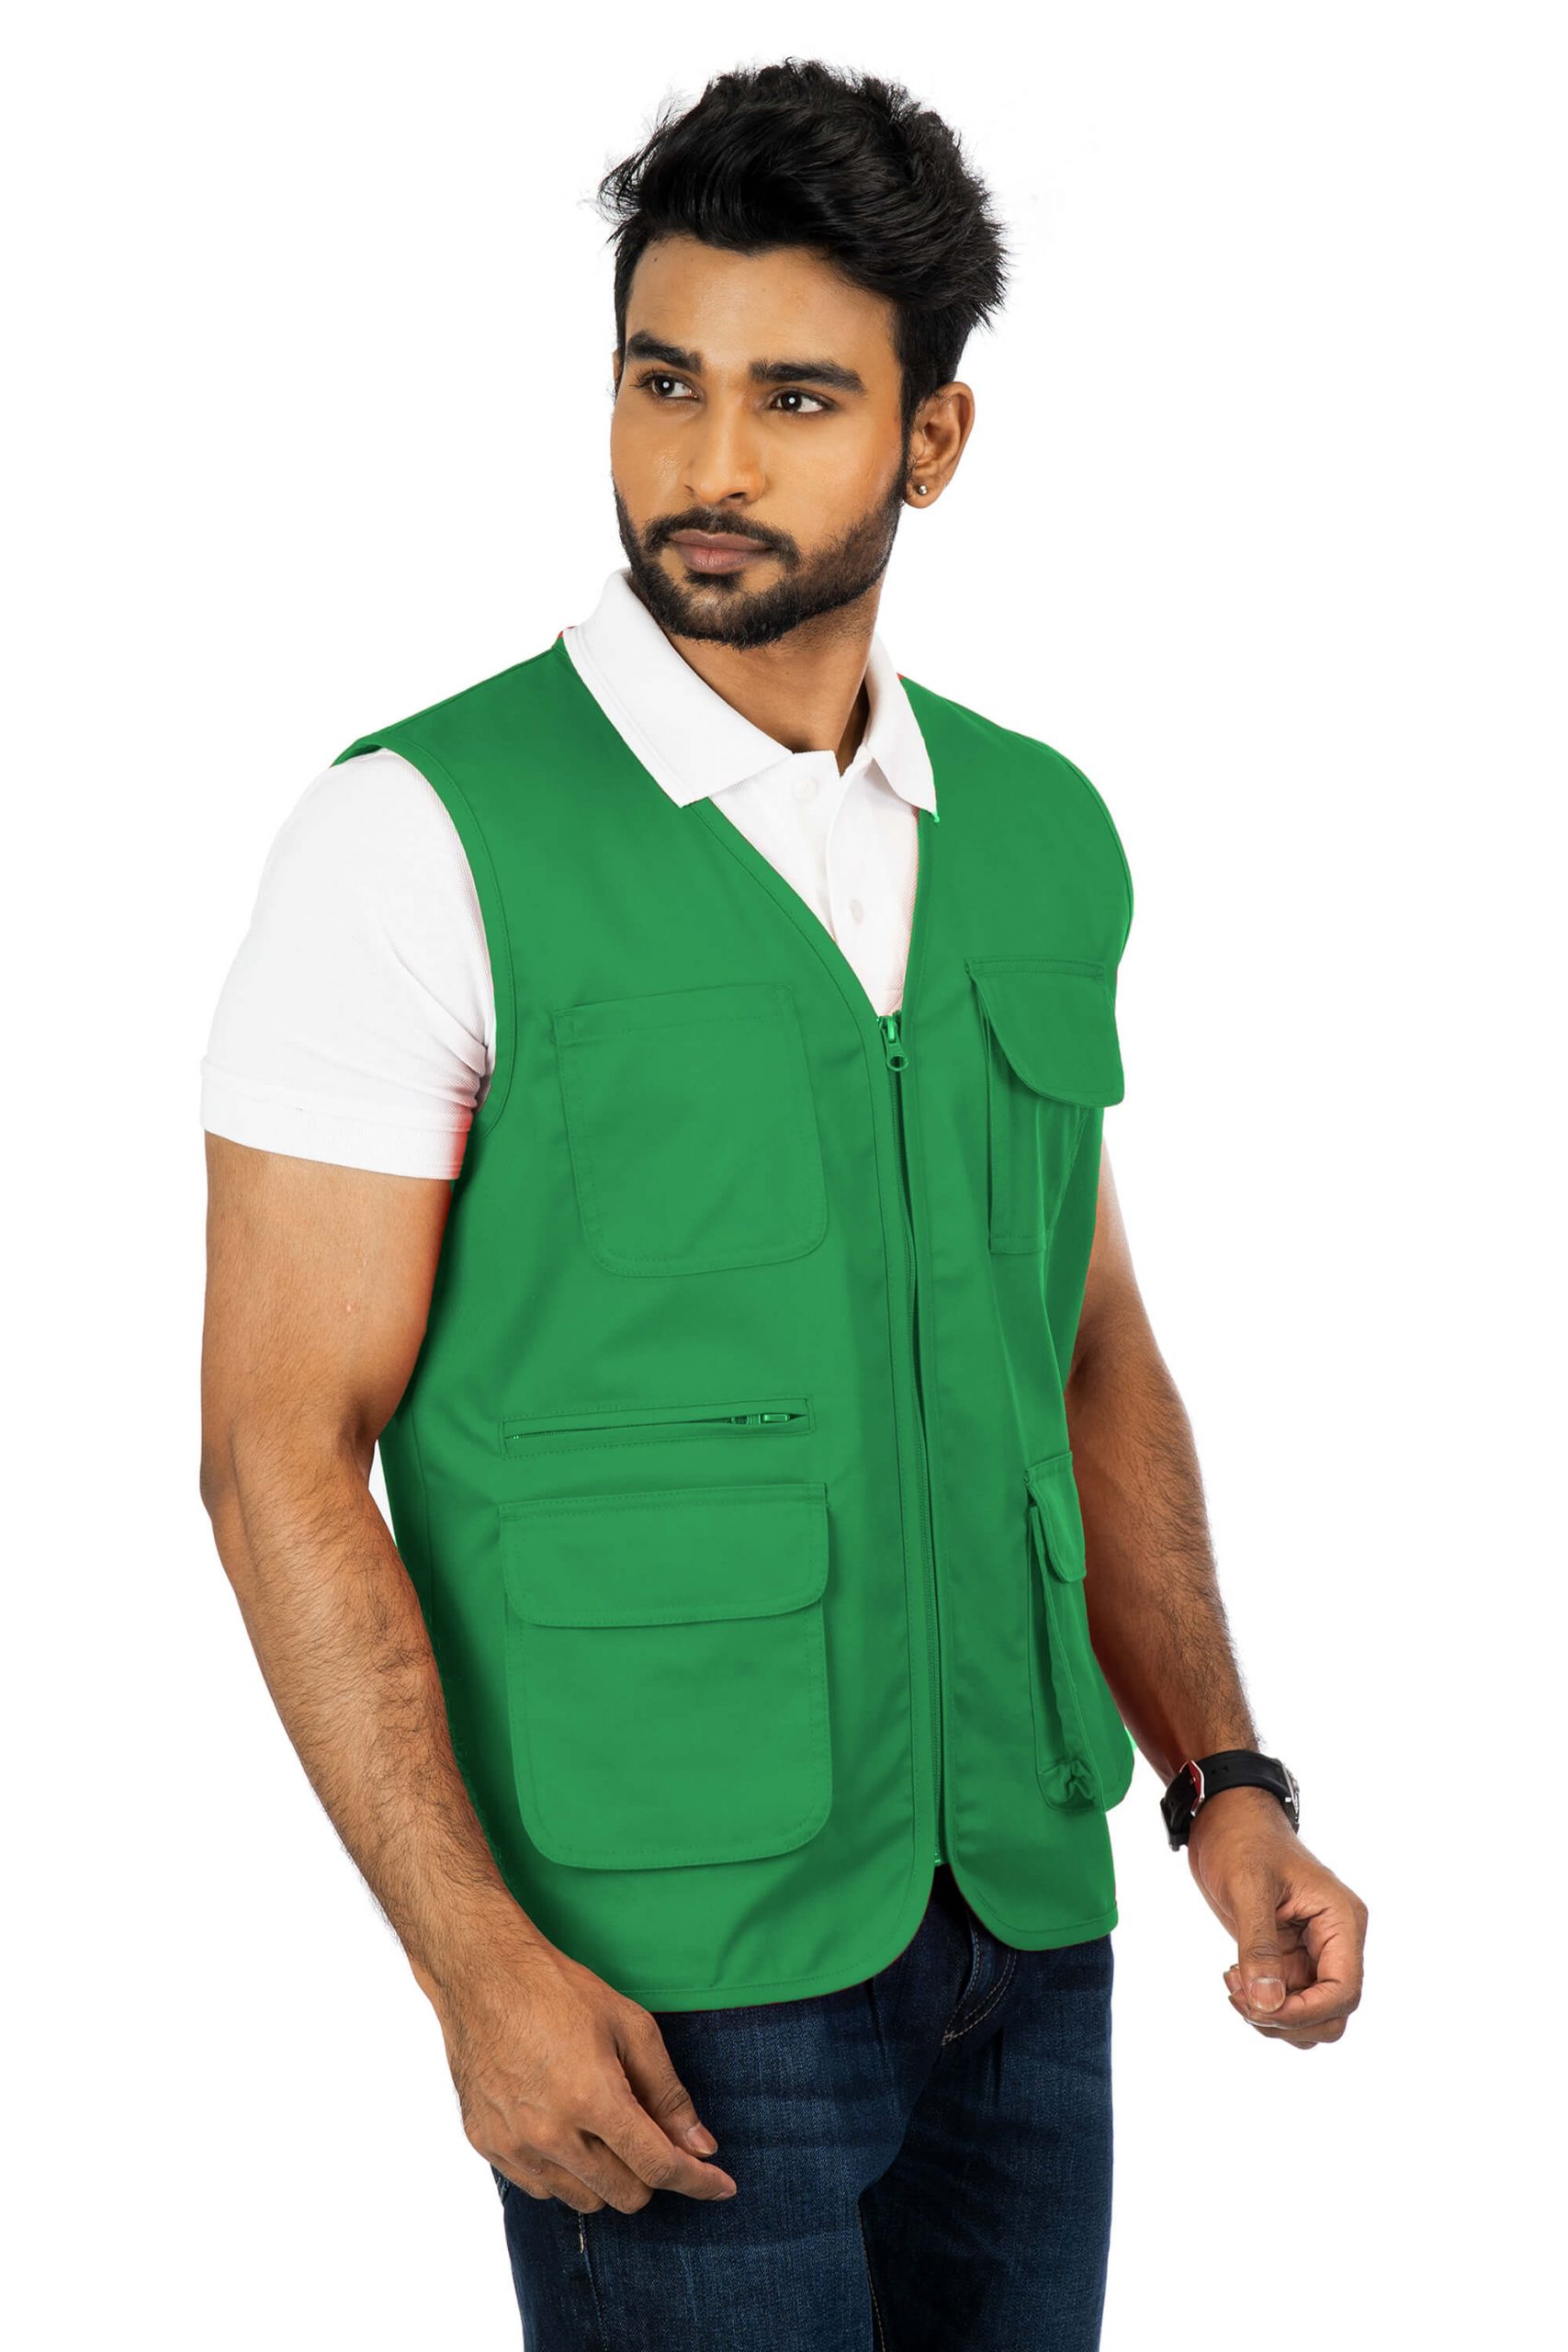 Stylised mid-torso bone pockets with concealed zips. An ergonomically designed multi-utility safari Green vest.